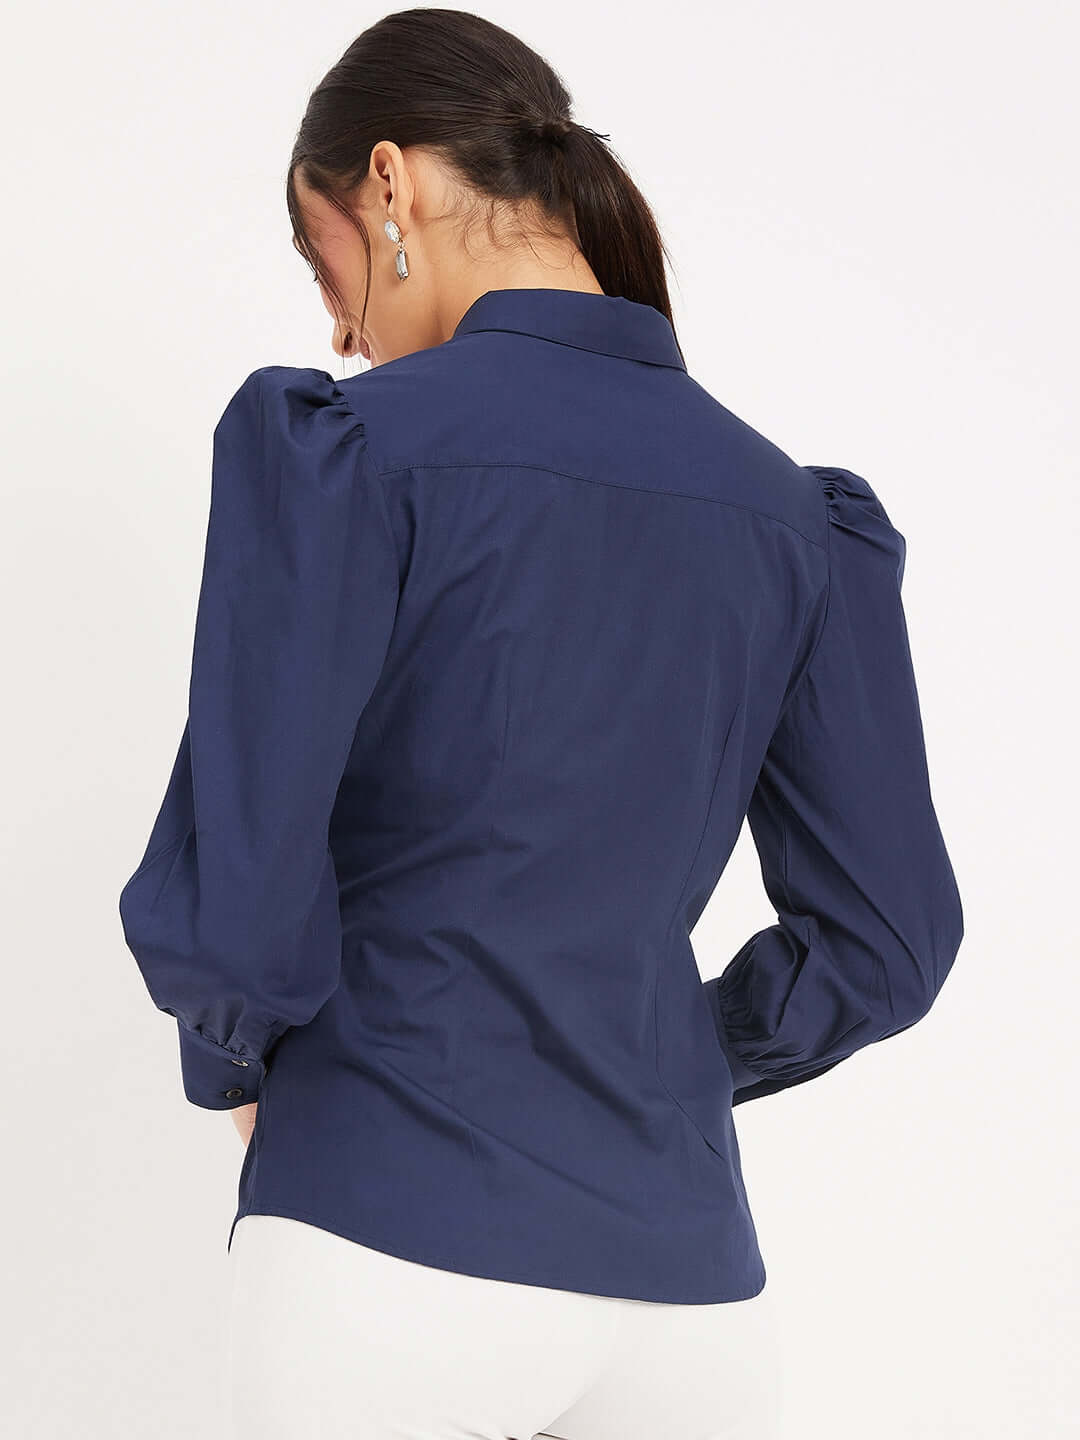 Soild Navy Blue Slim Fit Shirt